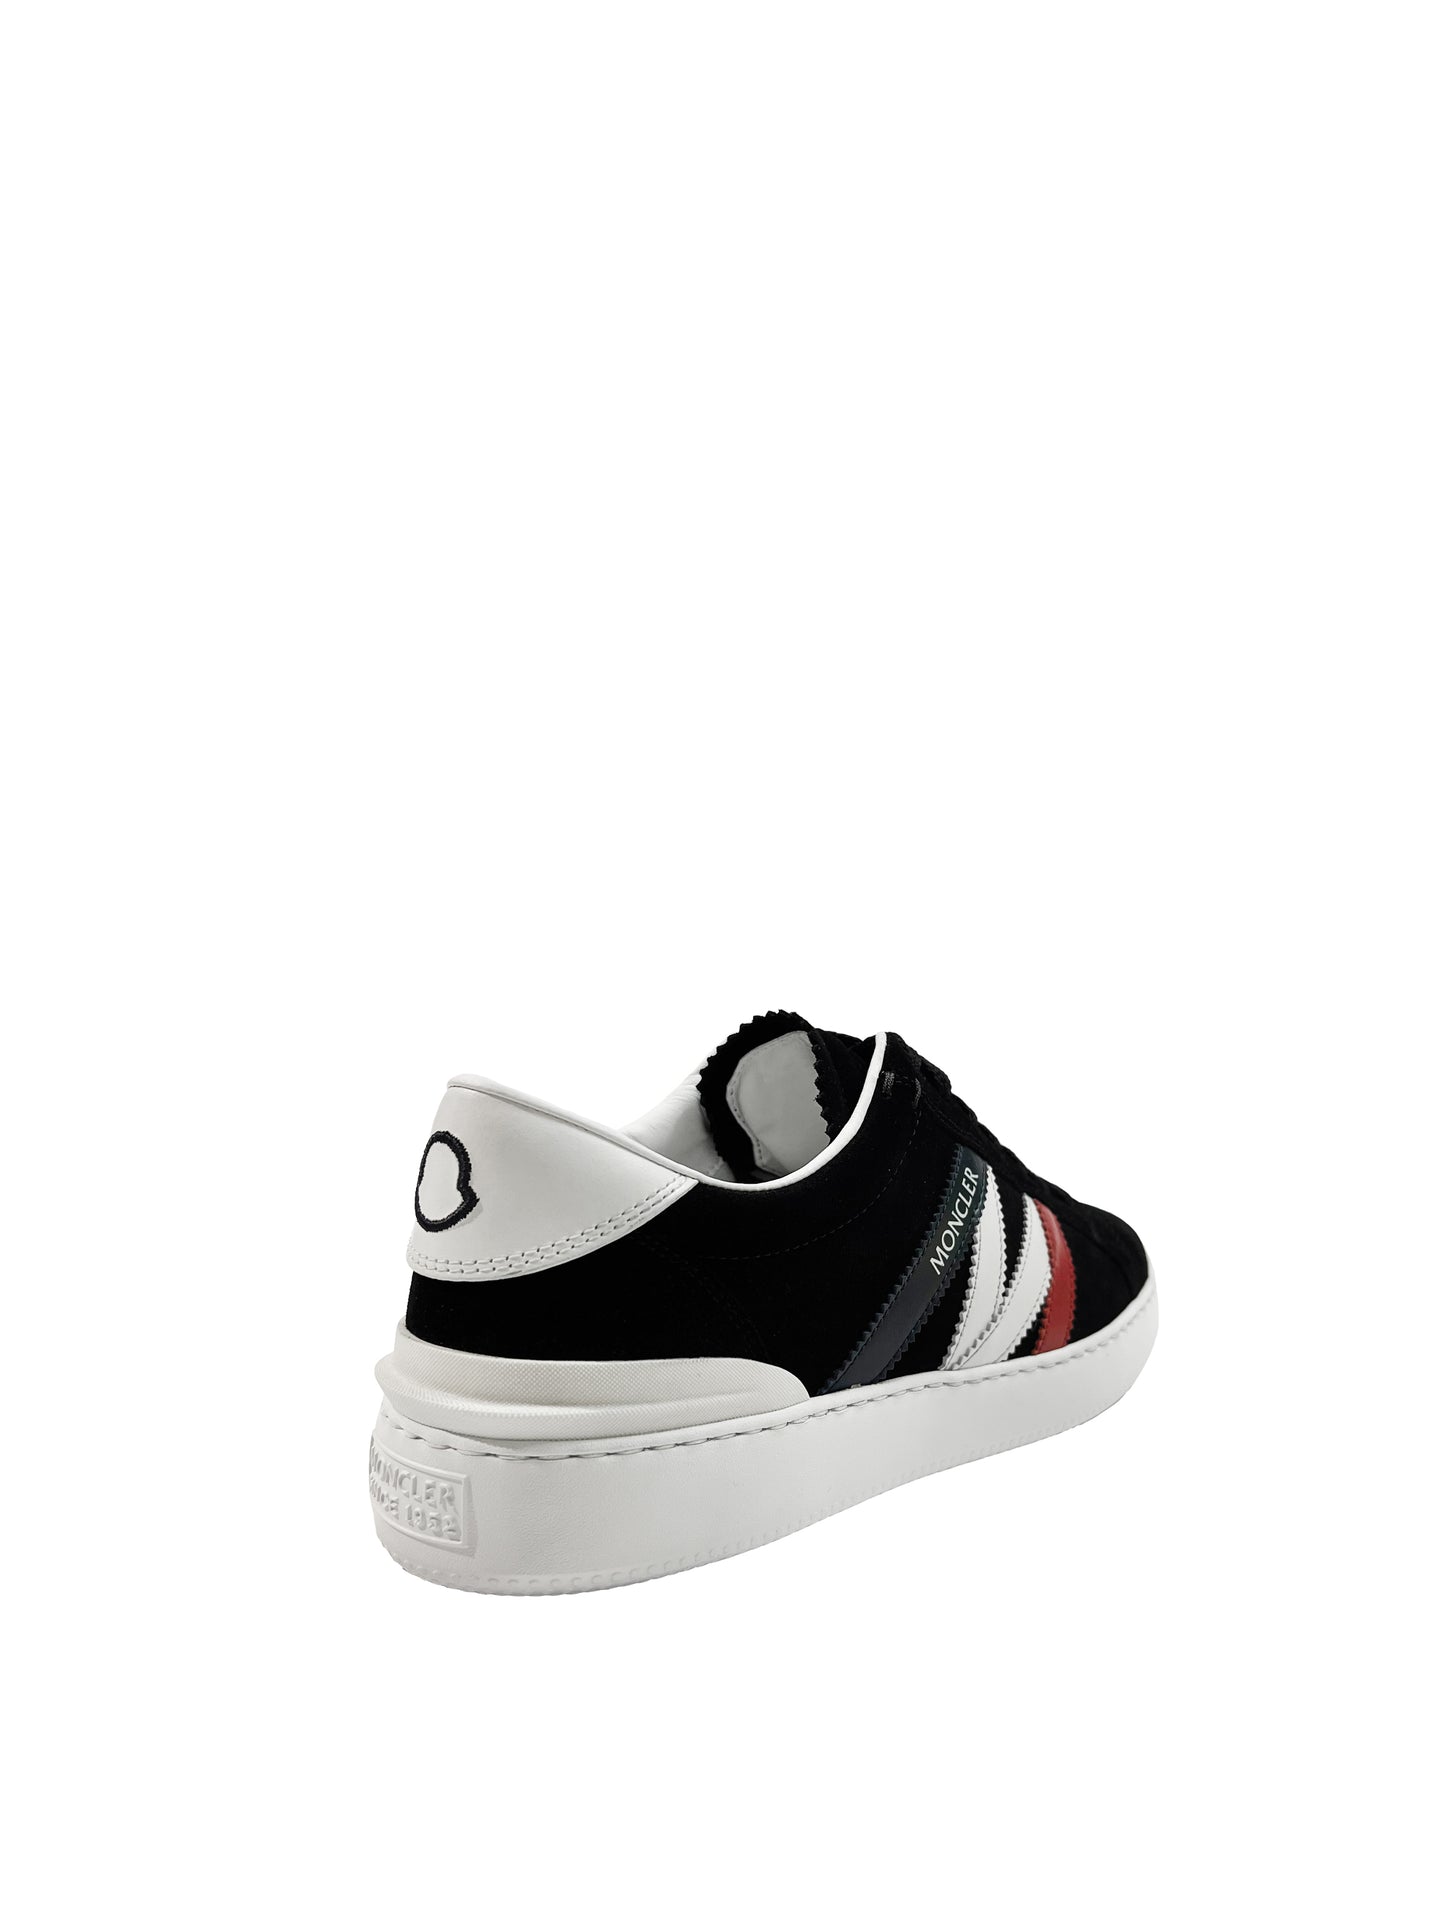 Moncler Sneaker Monaco Schwarz/Weiß